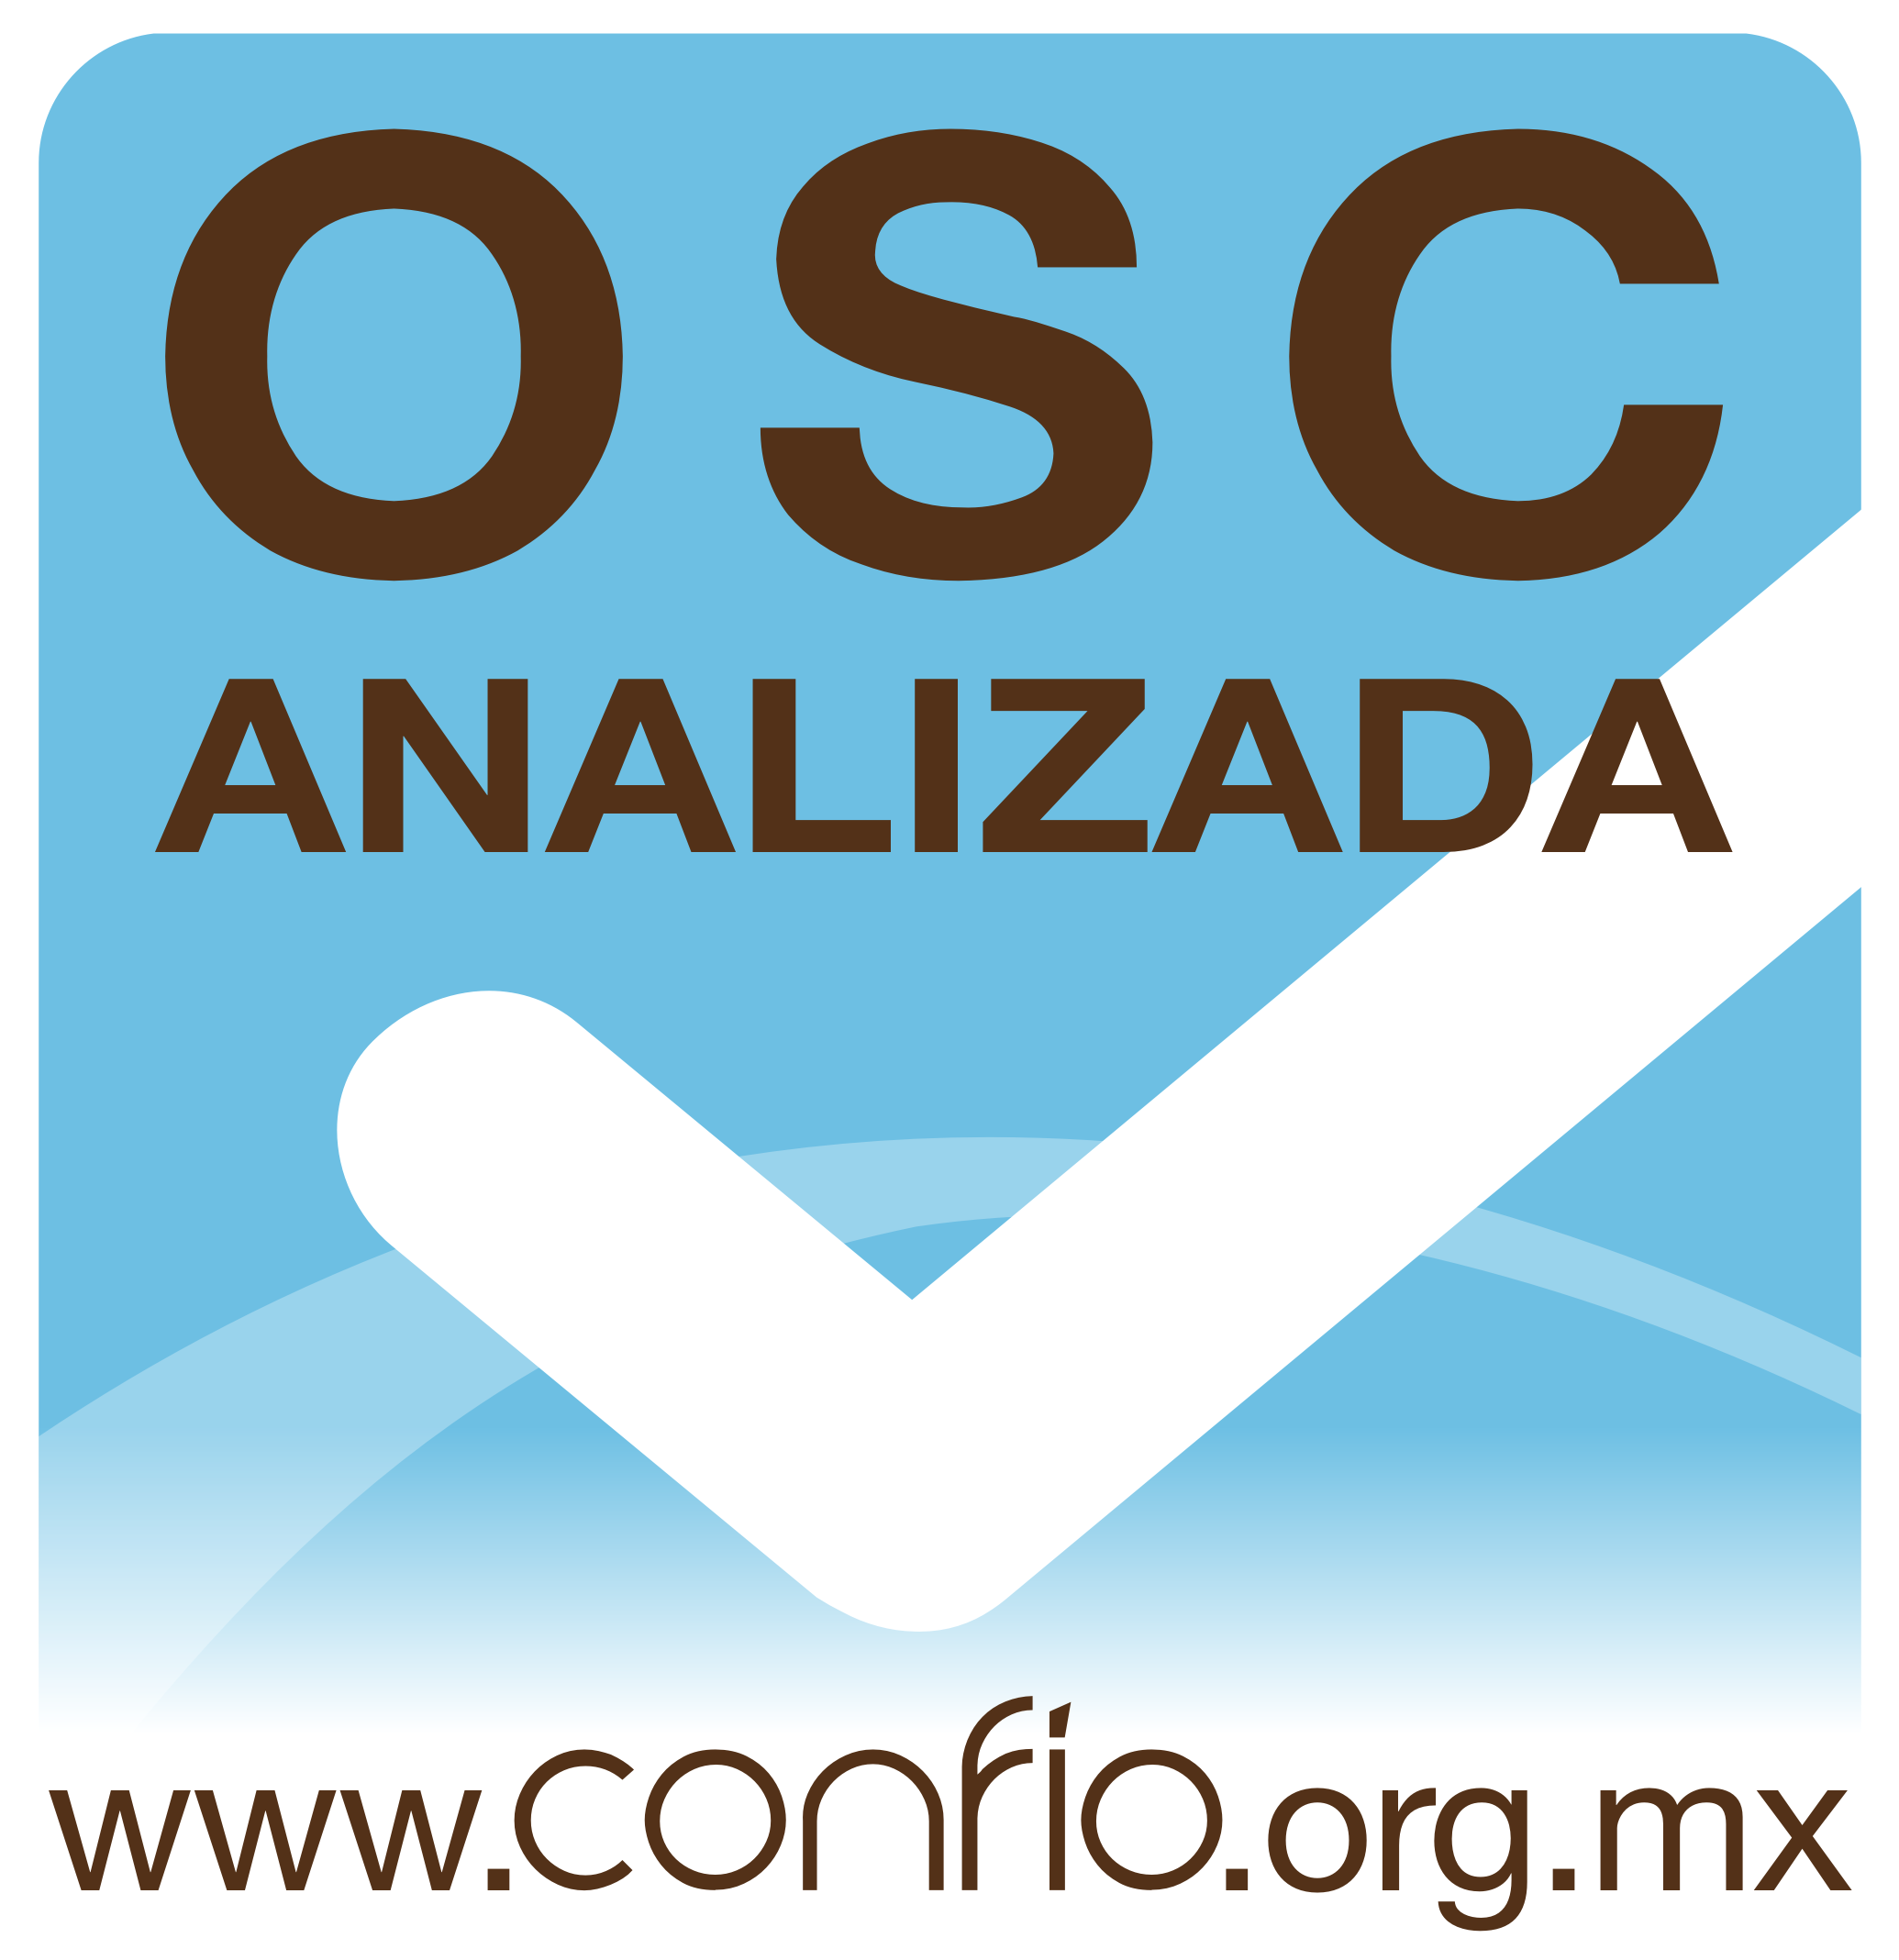 Confiio.org.mx